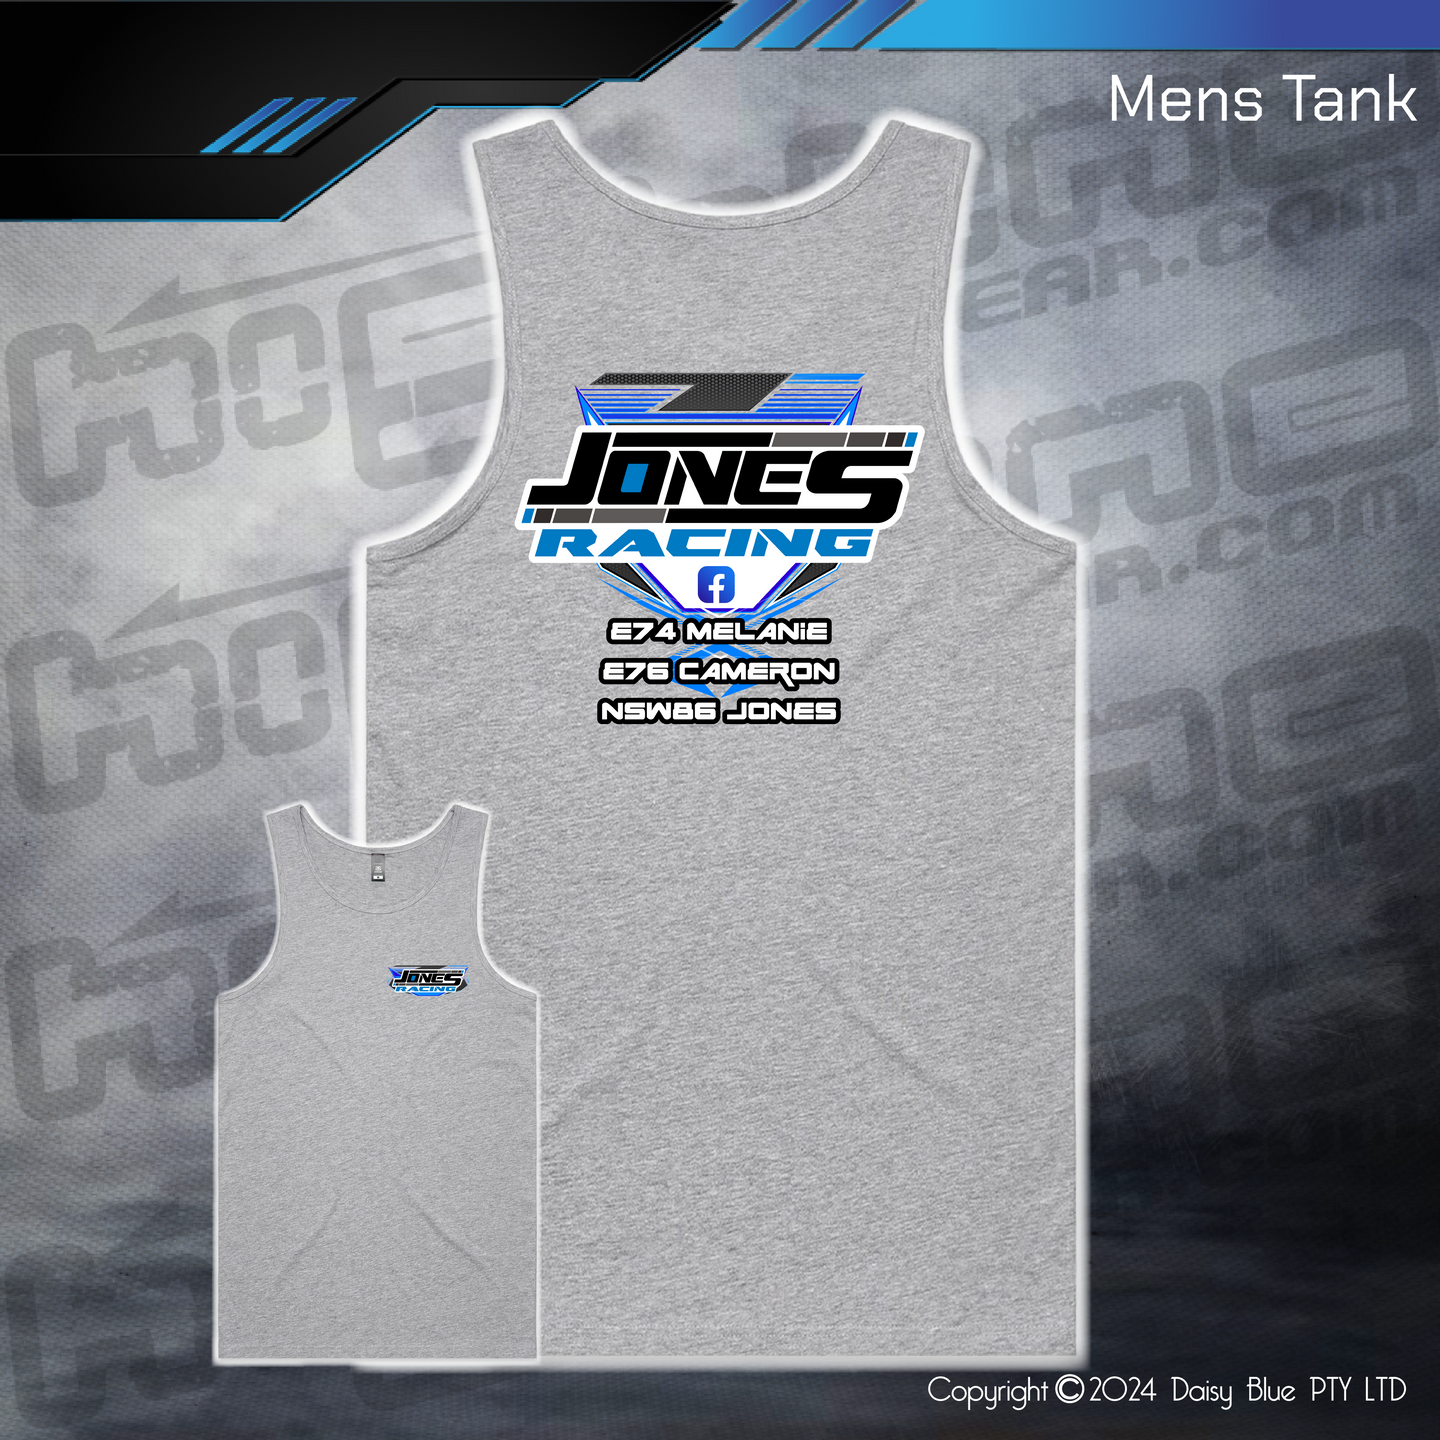 Mens/Kids Tank - Jones Racing